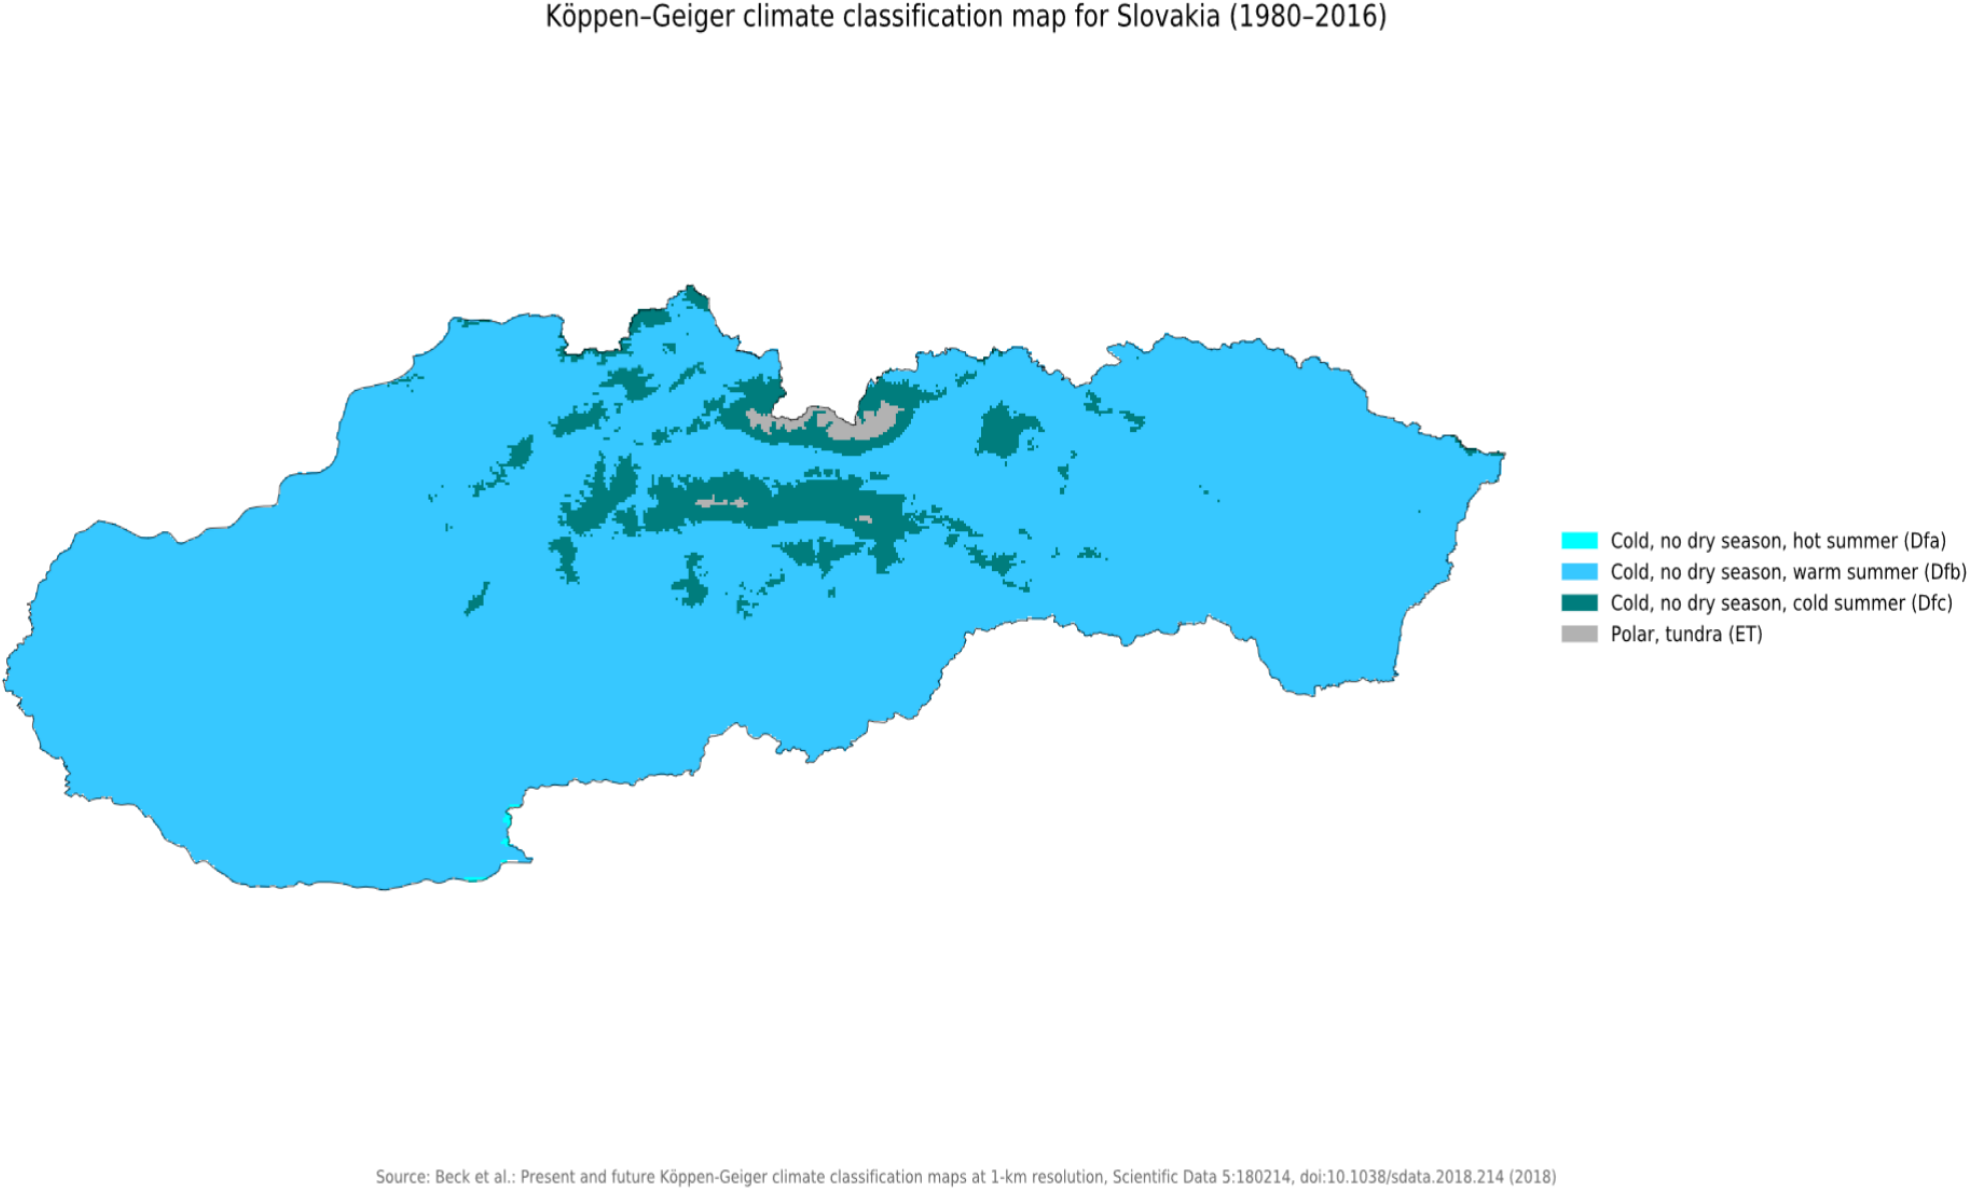 Slovakia Koppen Geiger Climate Map19802016